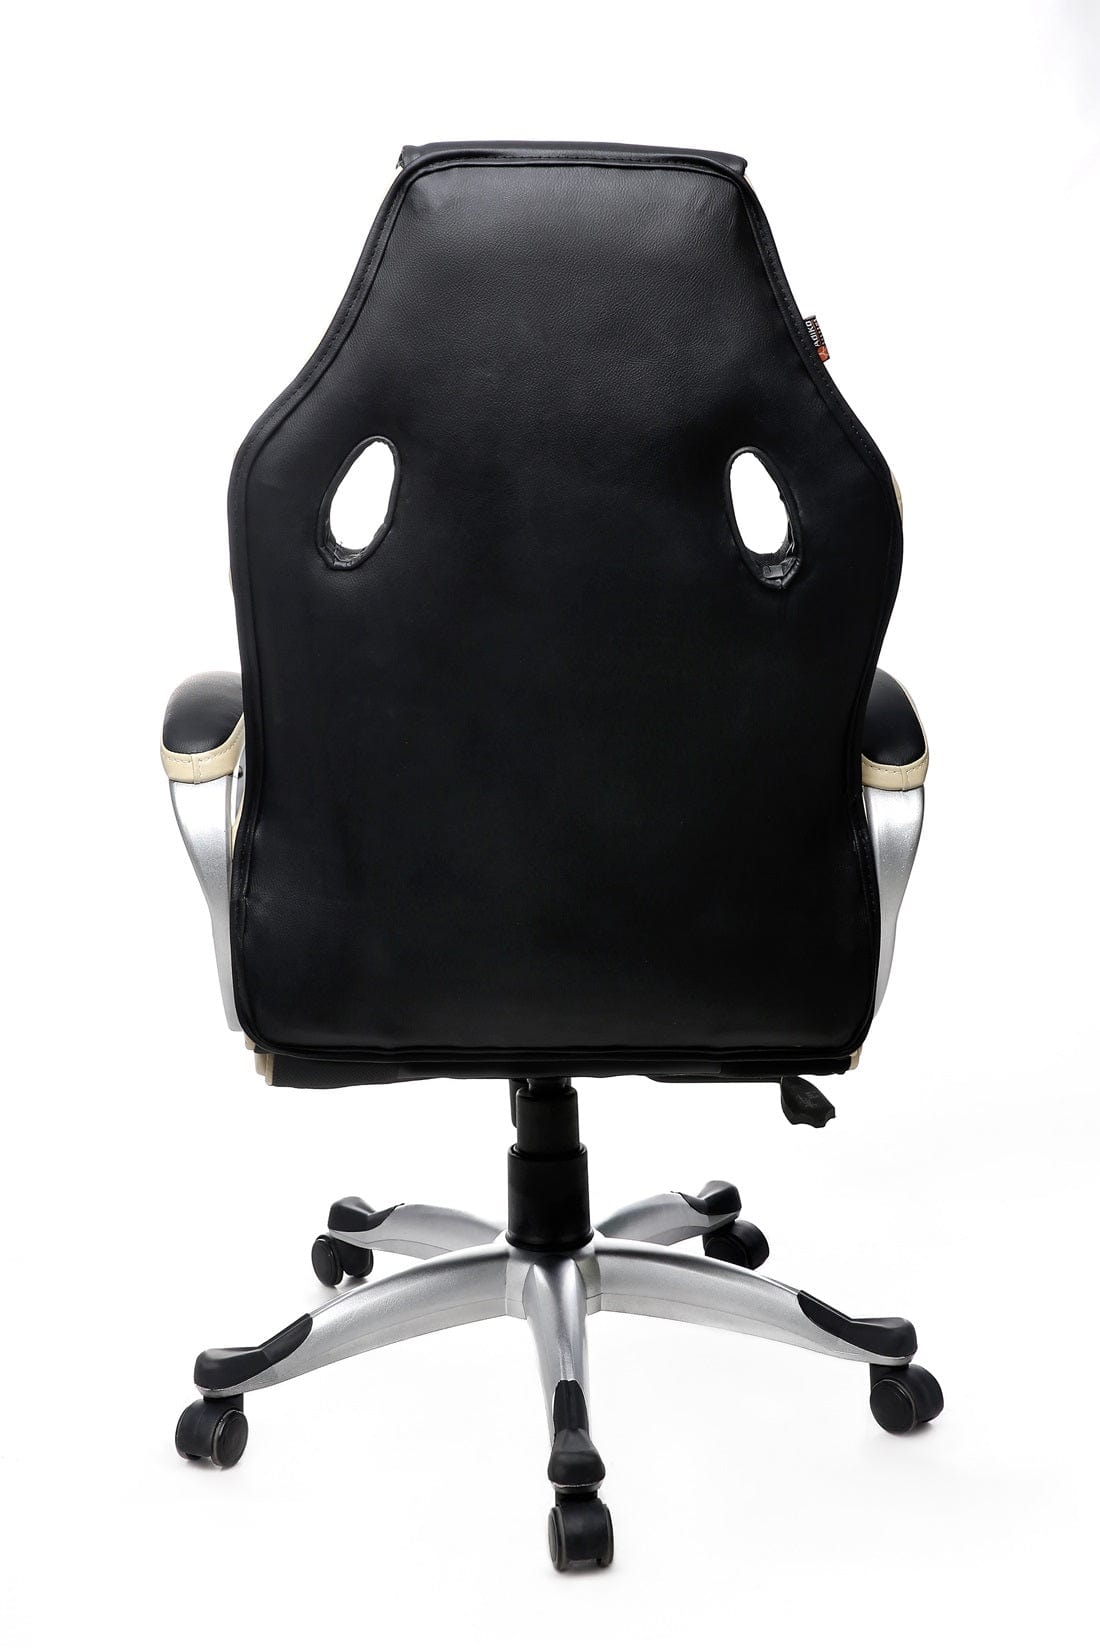 Adiko Stylish Gaming chair in Black/Cream